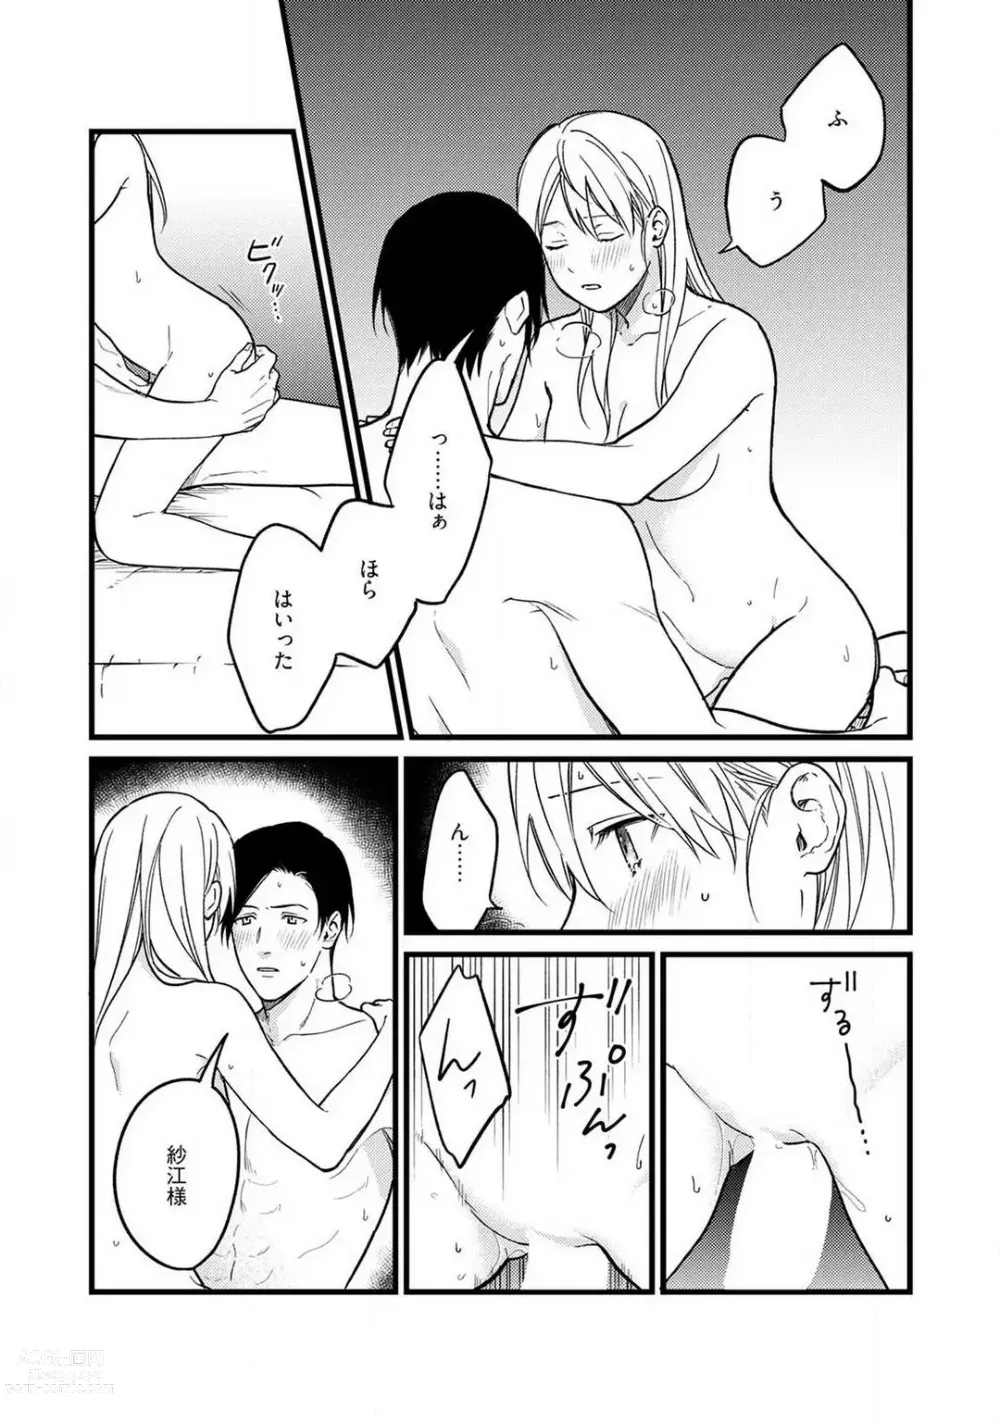 Page 128 of manga Shitsuji